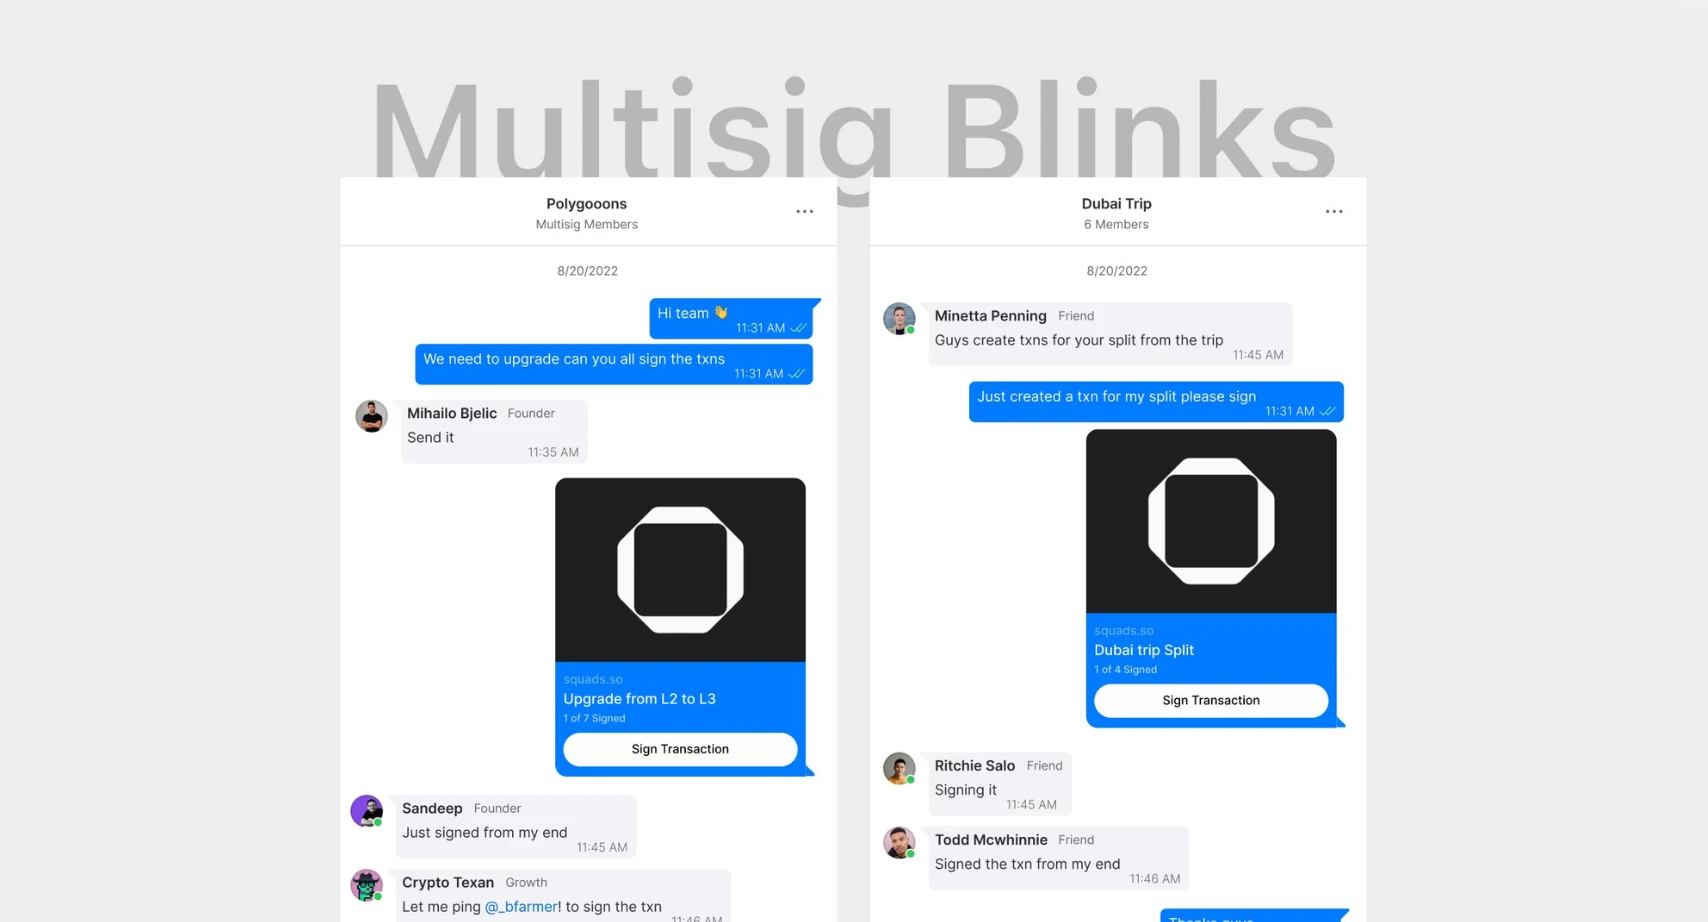 Blinks Fantasy: 基礎となるロジックから始めて、最も可能性のあるアプリケーション シナリオを探索します。